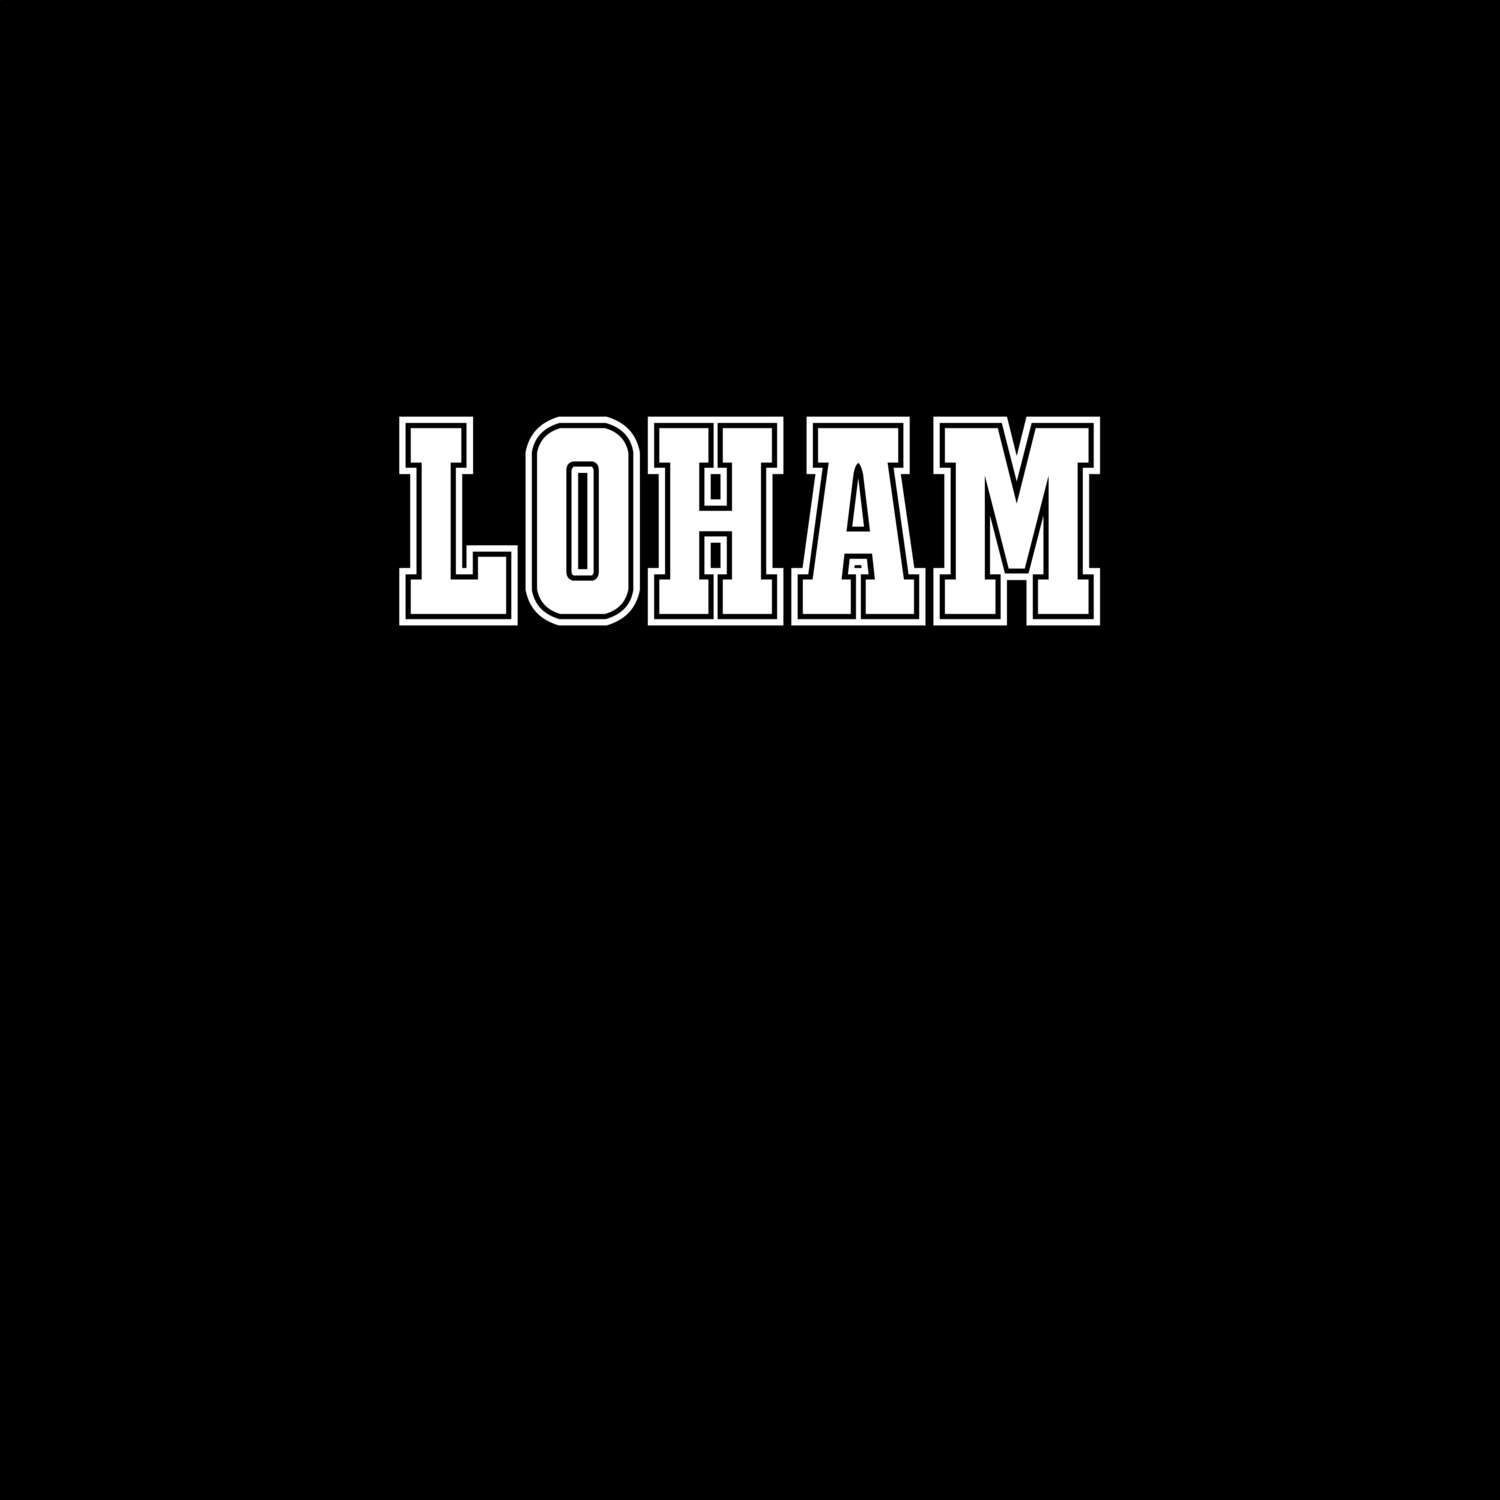 Loham T-Shirt »Classic«